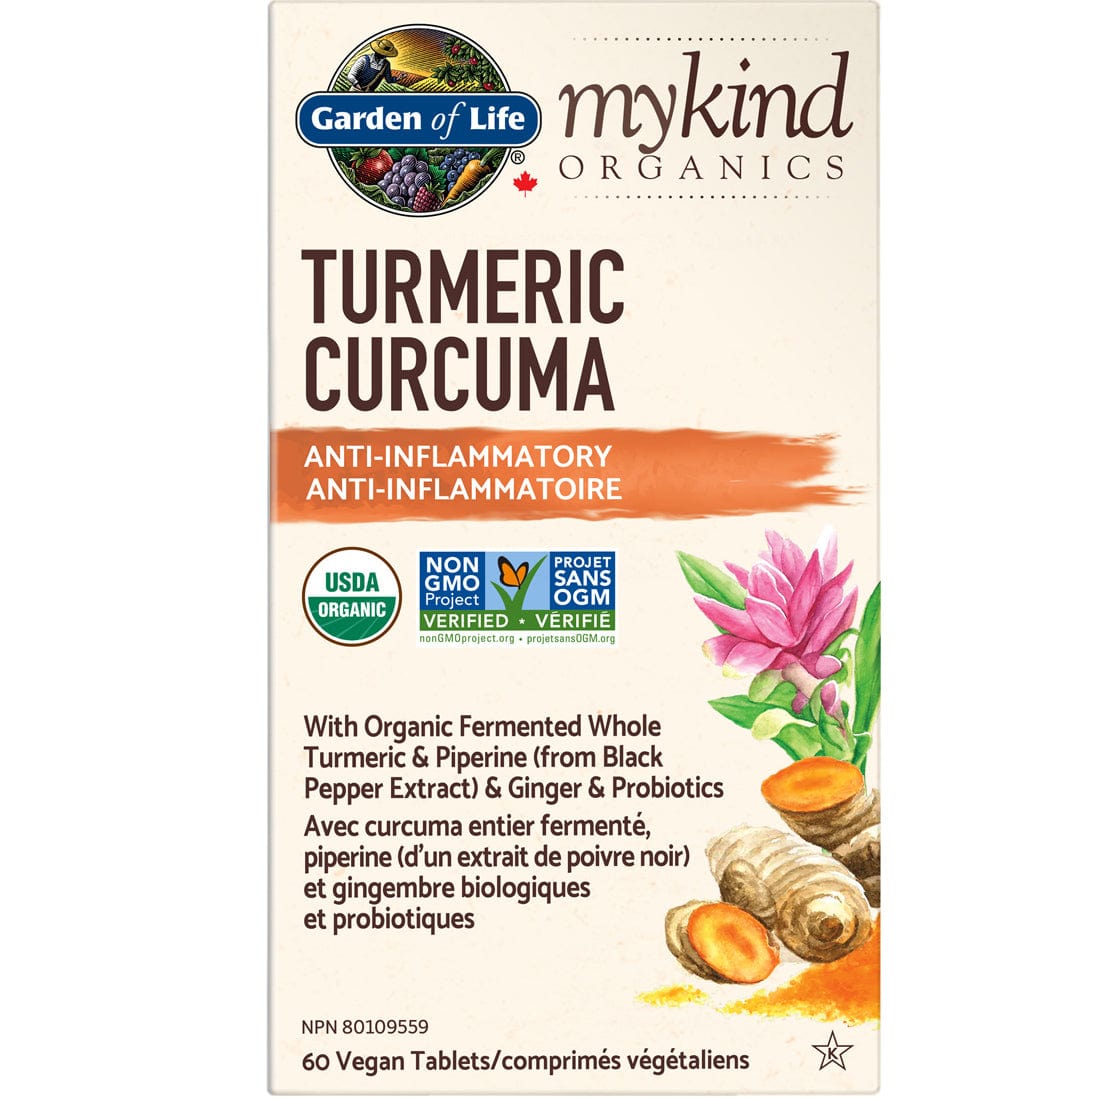 Garden of Life mykind Organics Turmeric, 60 Tablets